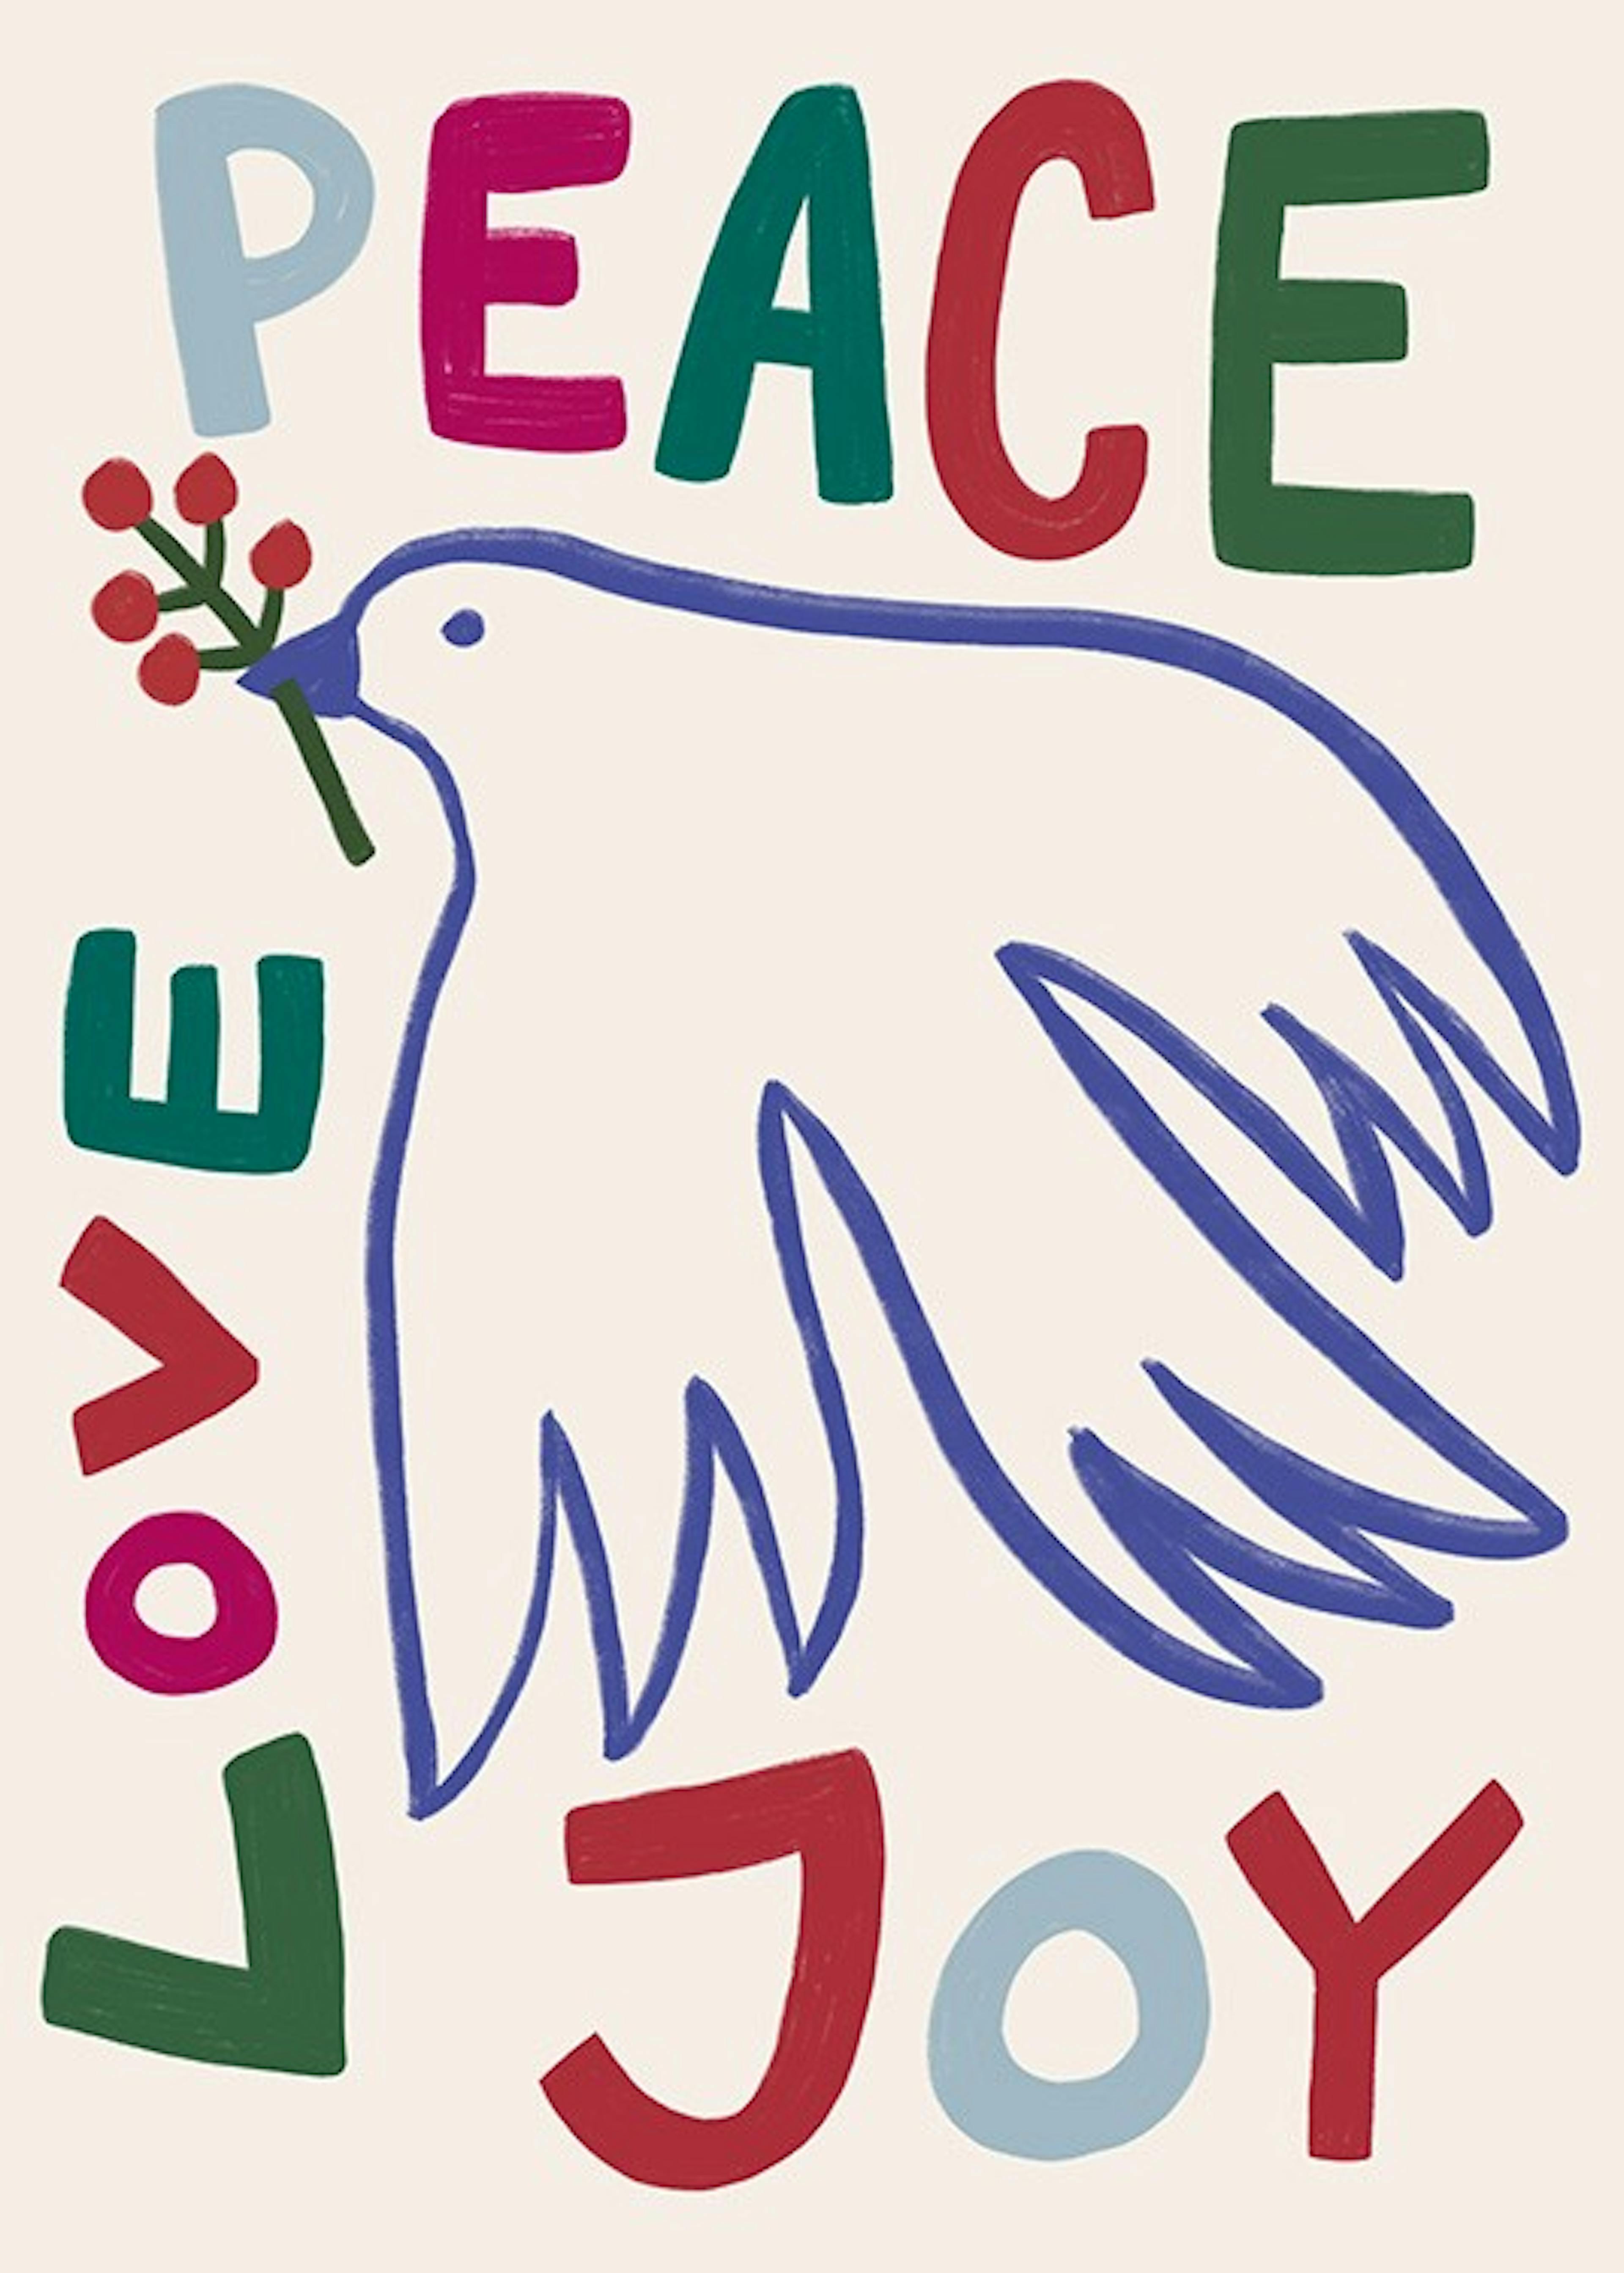 Peace Love Joy Print